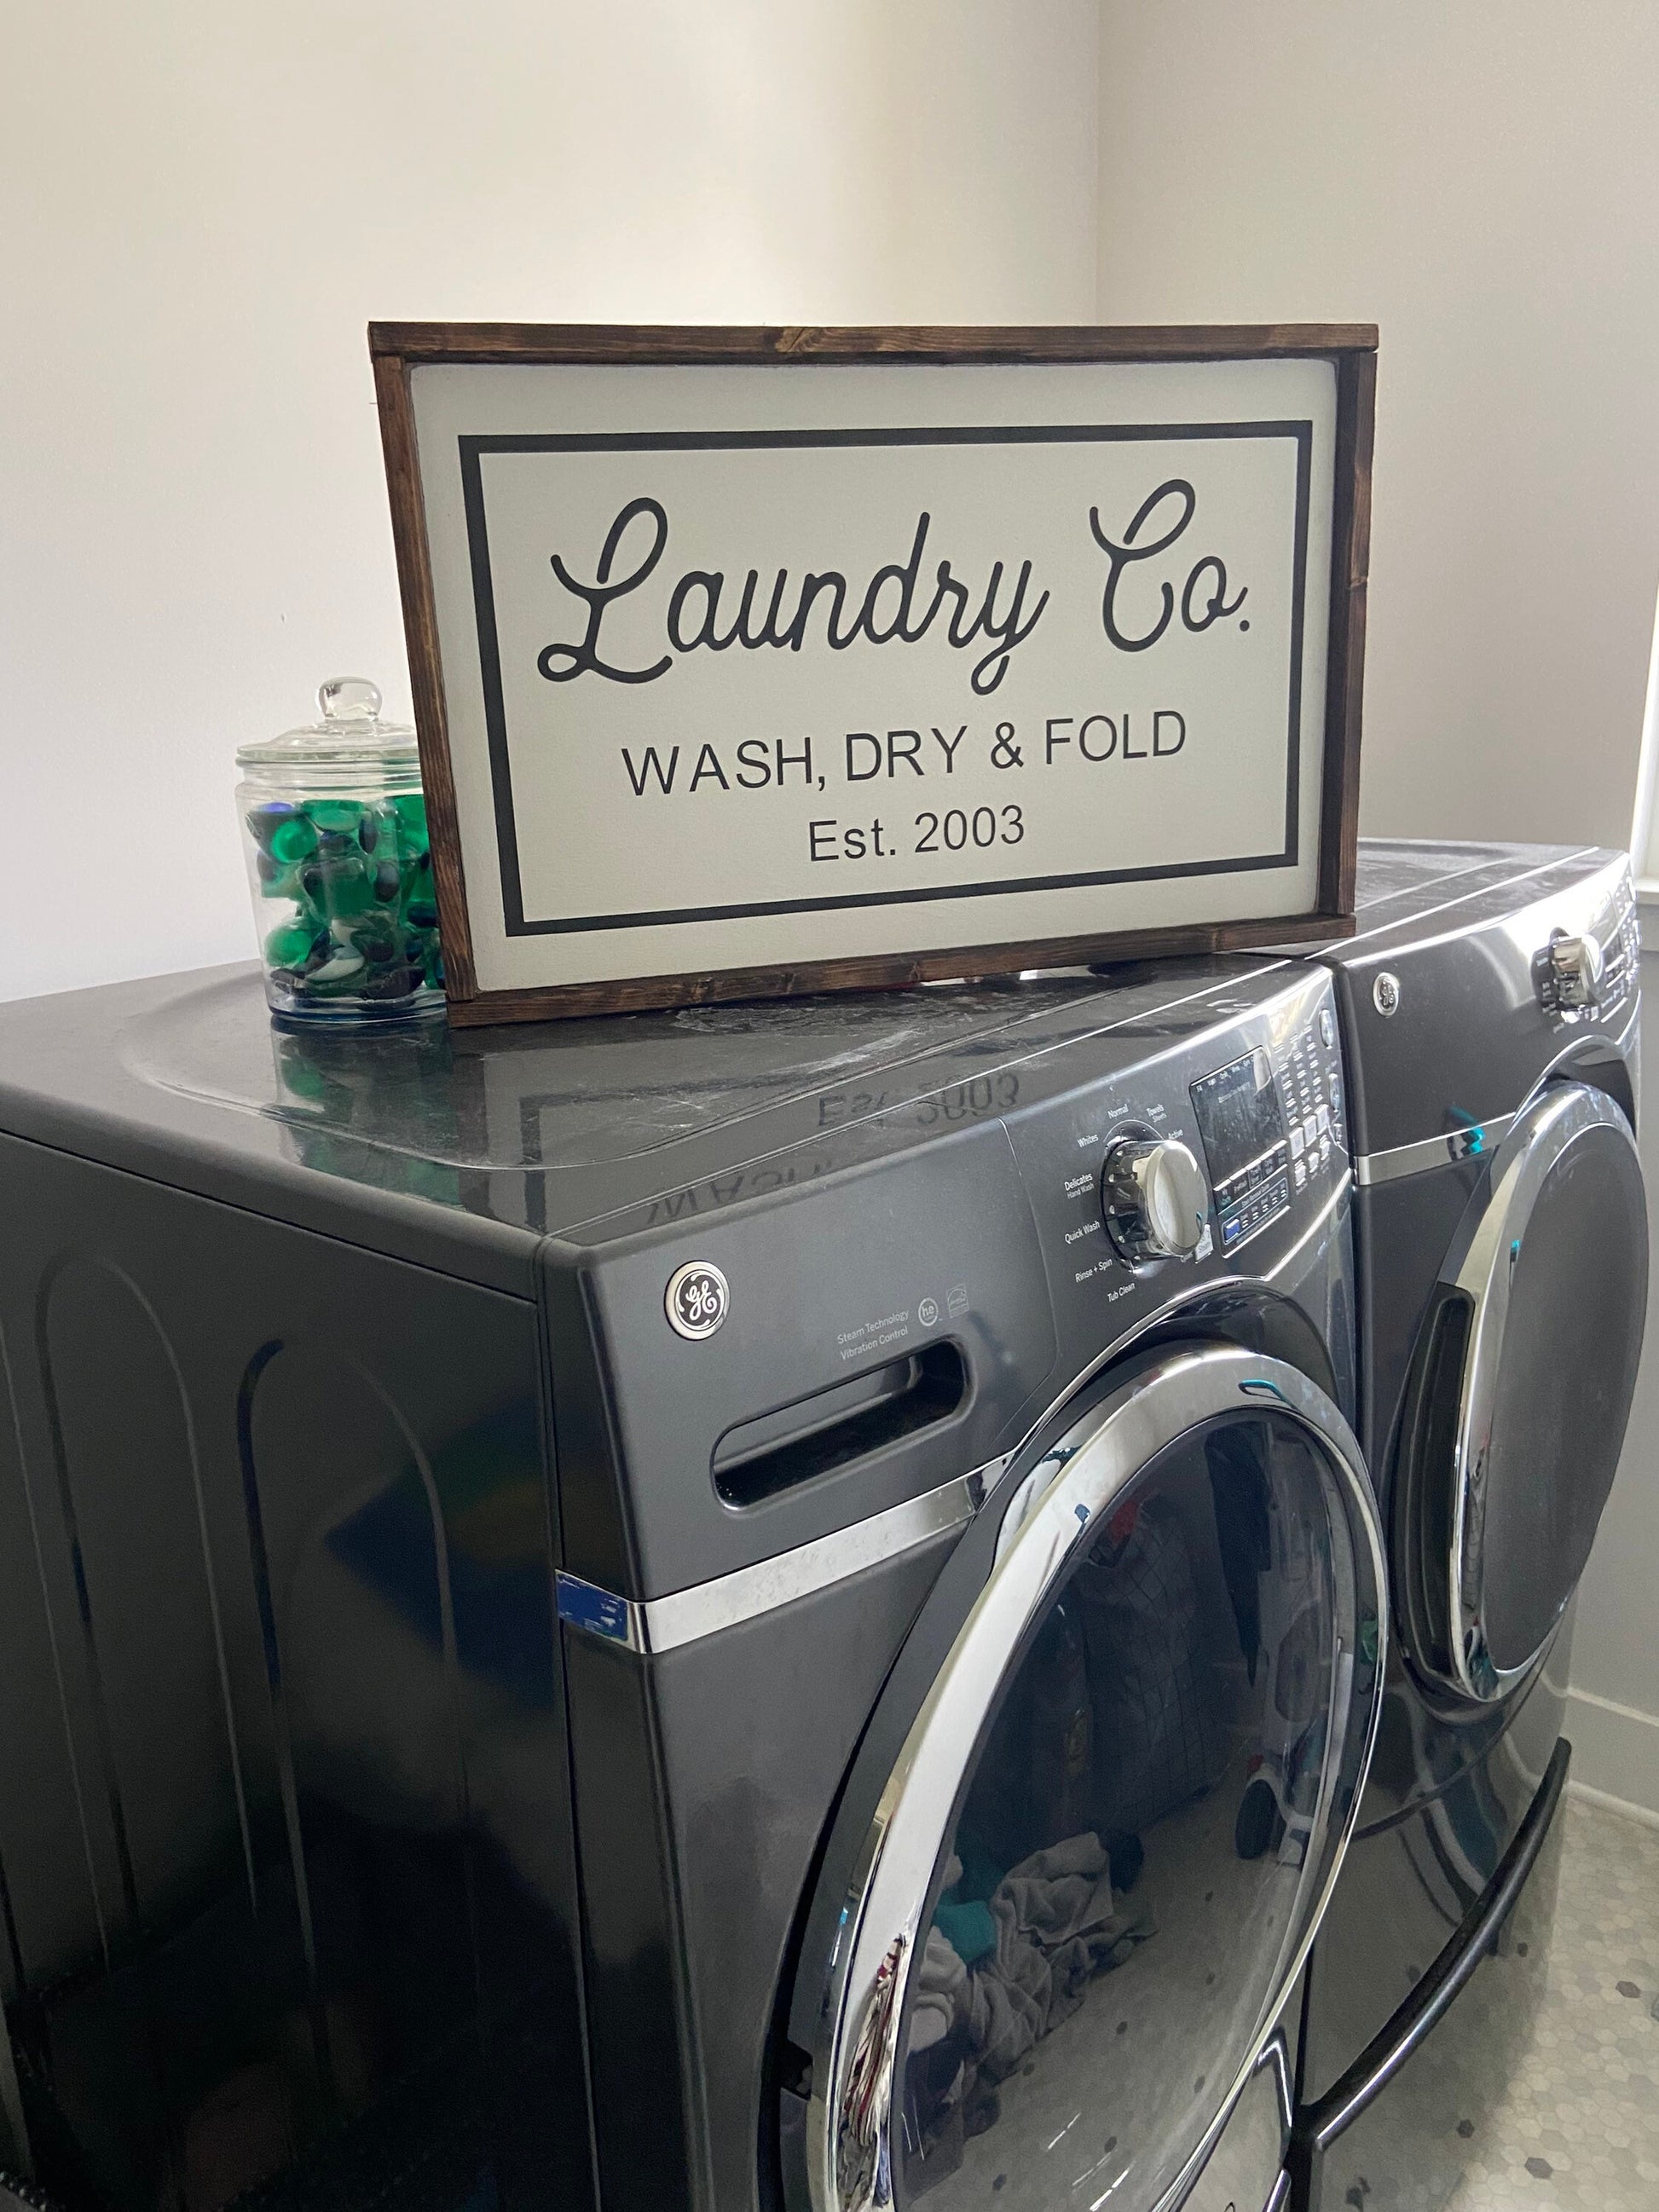 Laundry Co. [FREE SHIPPING!]